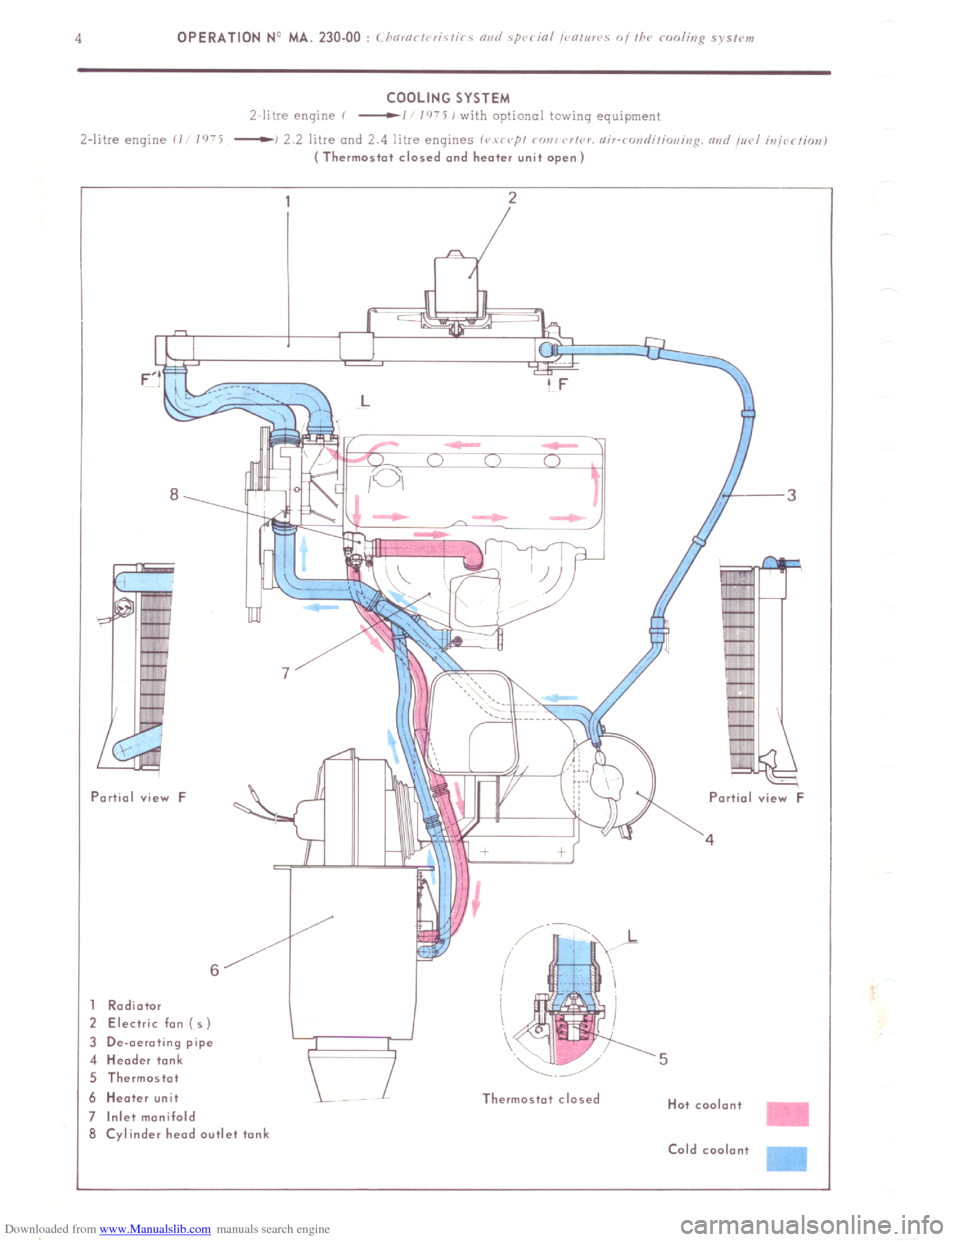 Citroen CX 1980 1.G Workshop Manual Downloaded from www.Manualslib.com manuals search engine - 
- 
‘F 
L 
Radiator 
! Electric fan ( 5) 
I De-oeroting pipe 
I Header tank 
i Thermostot 
I Heater unit 
Inlet manifold 
i Cylinder head o